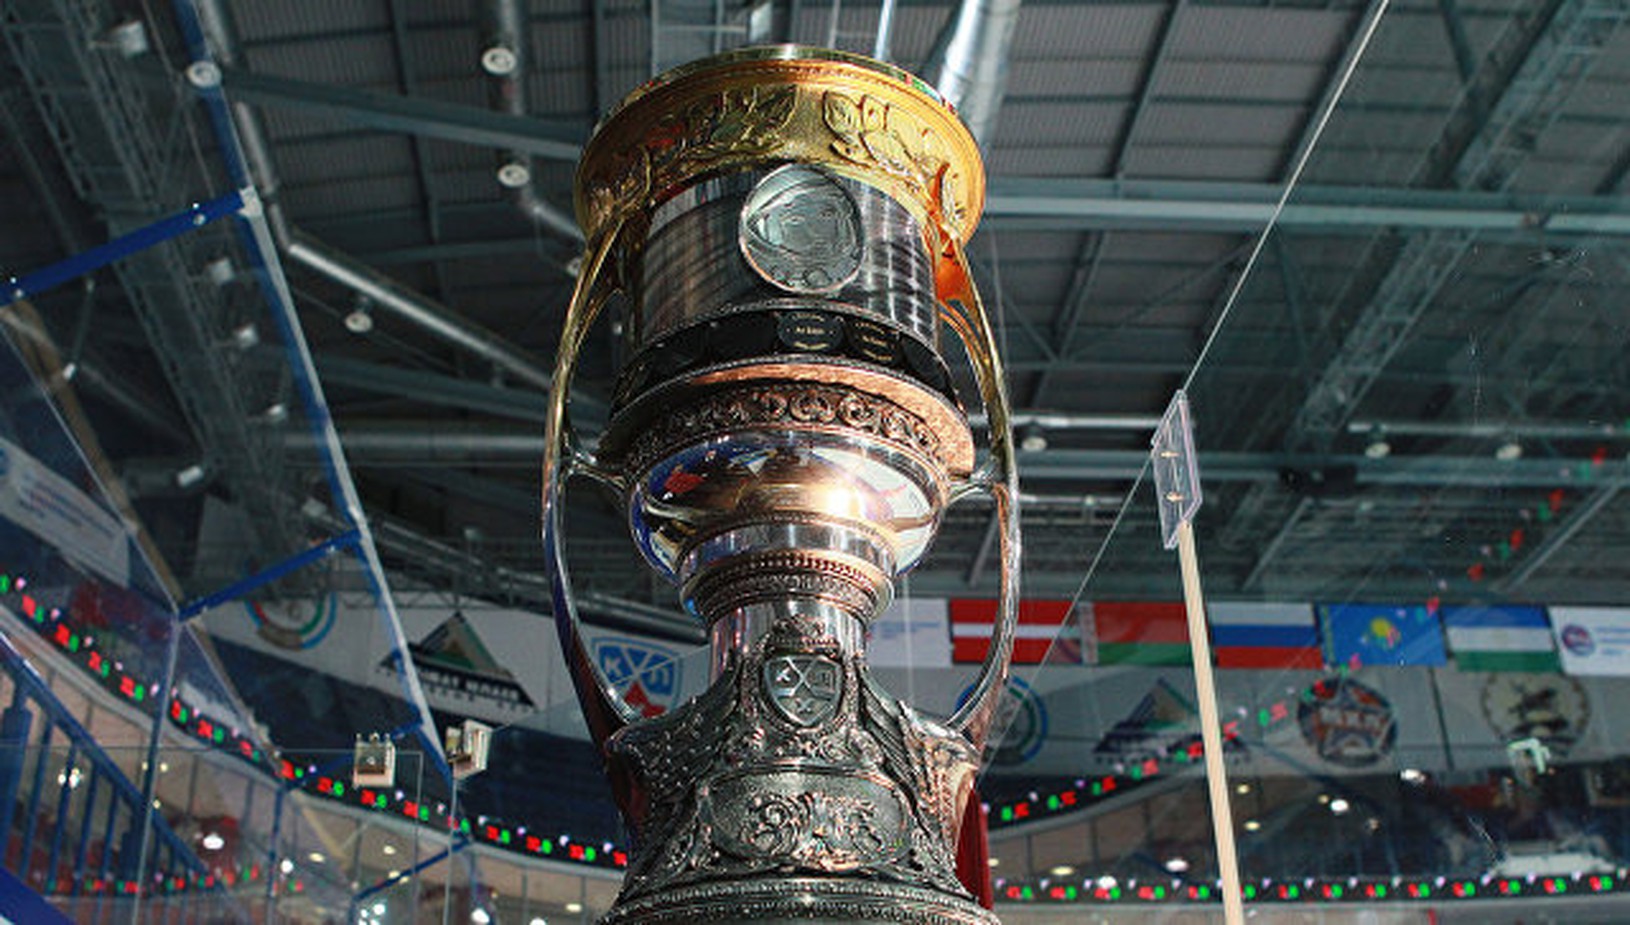 Gagarinov pohár